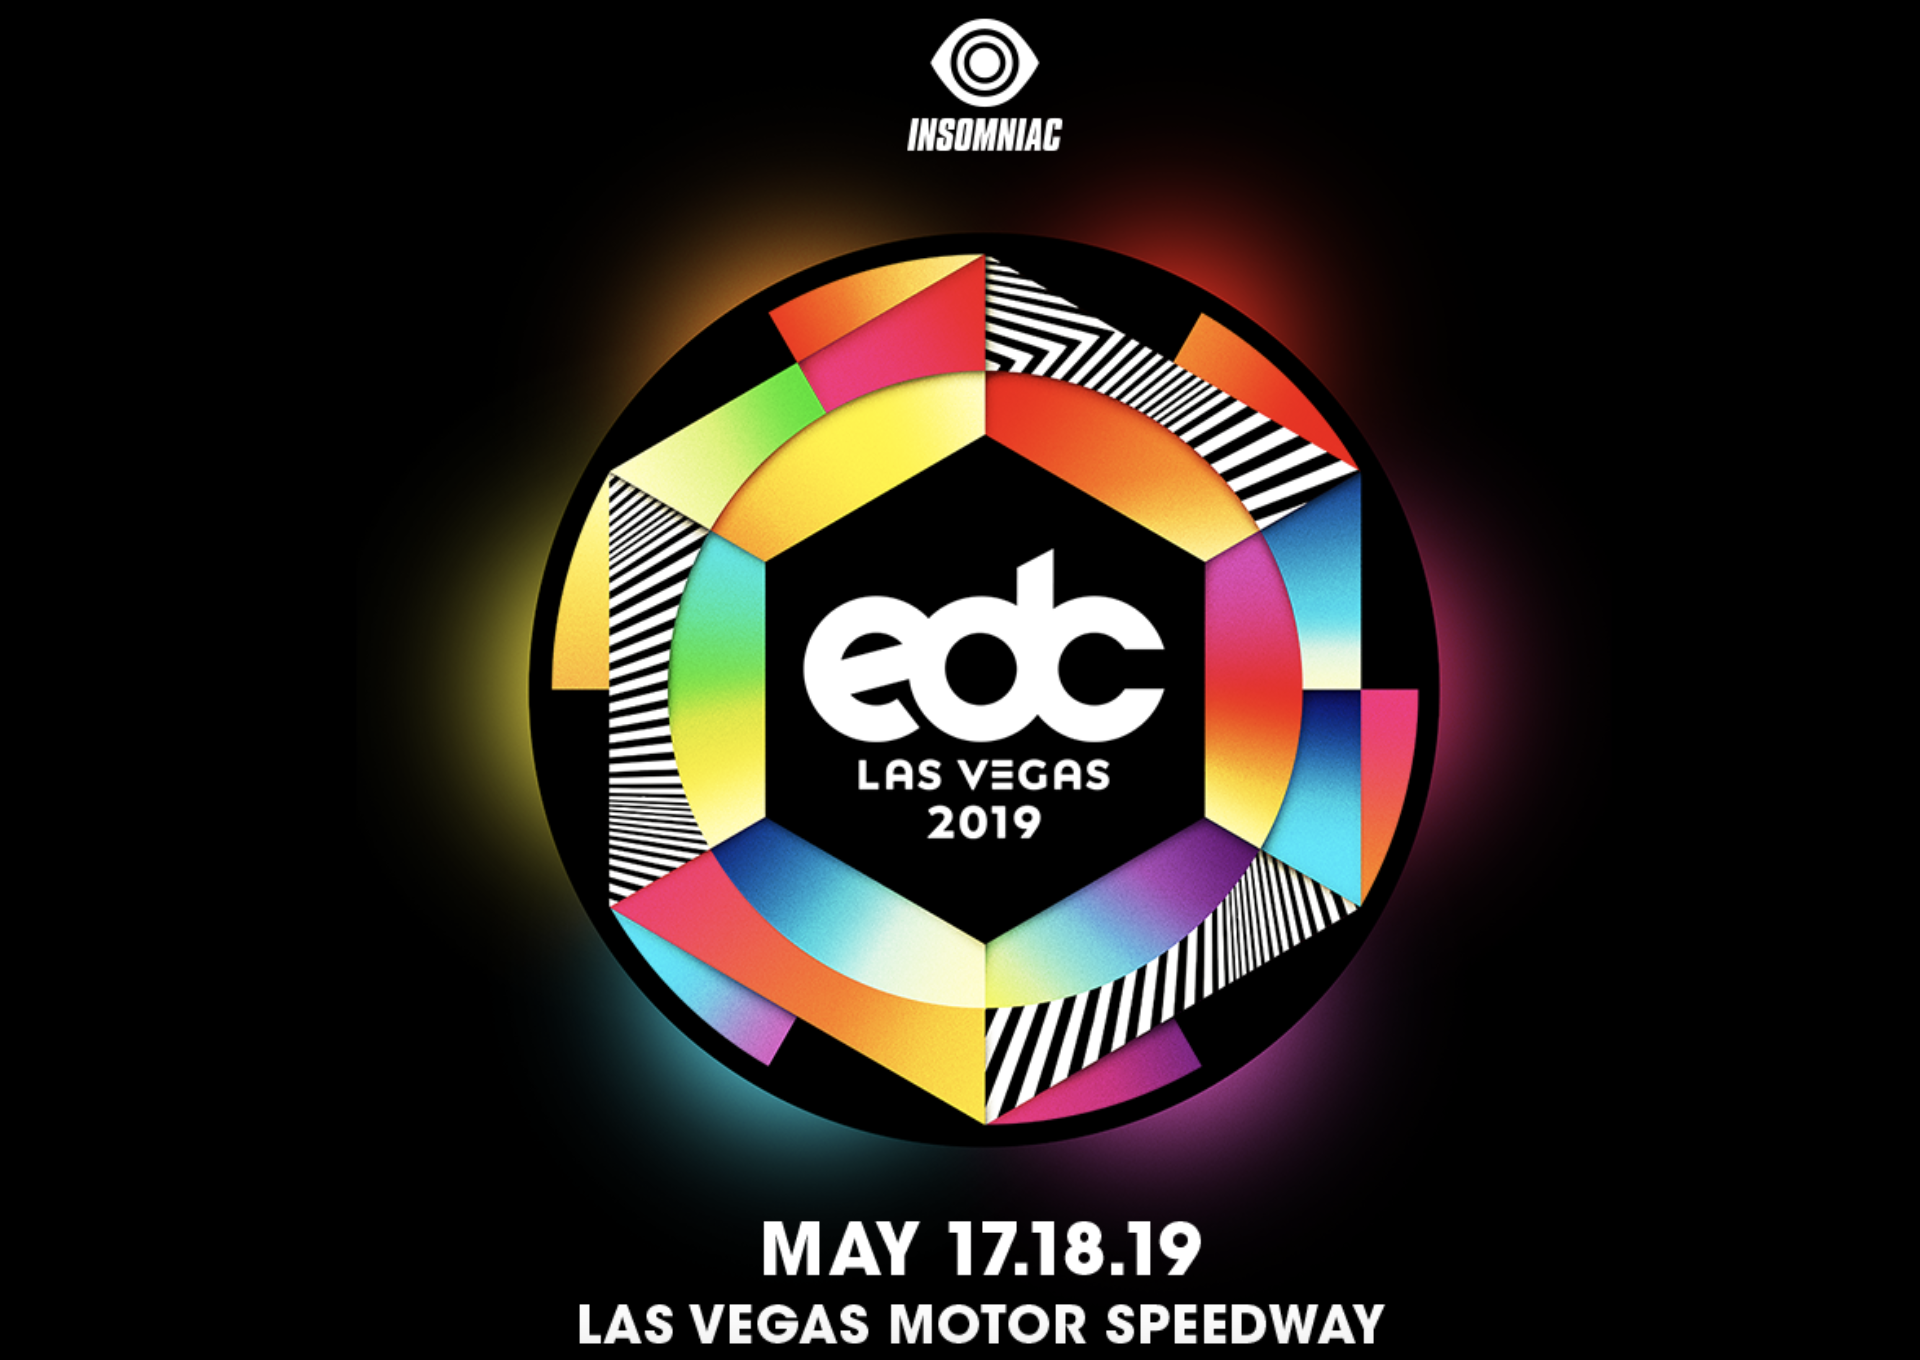 EDC Las Vegas 2019 Tickets Are On Sale Now